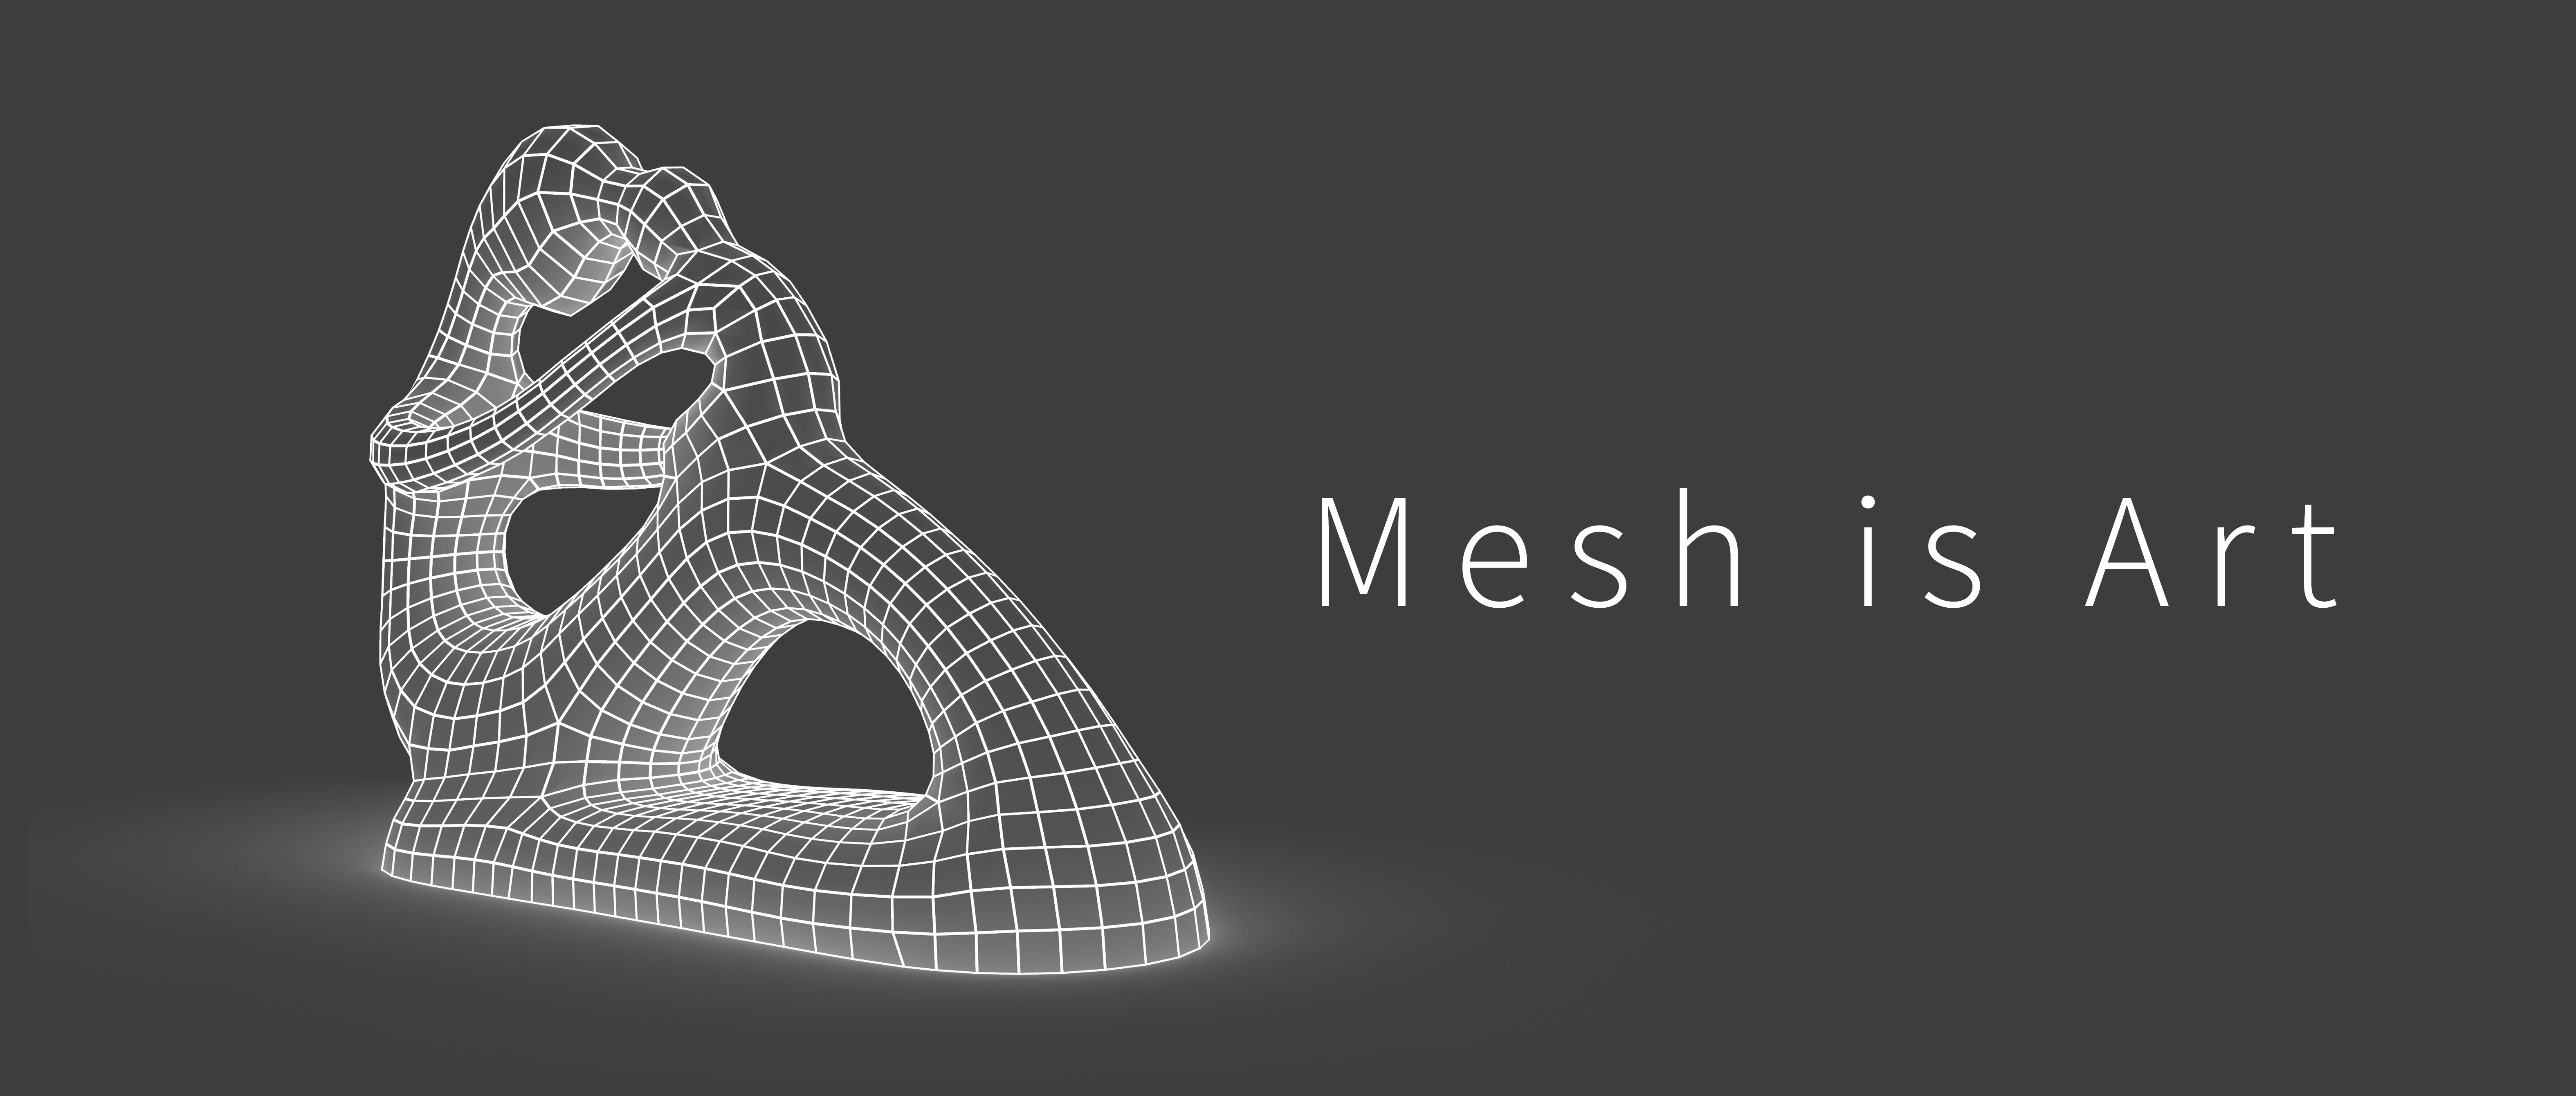 Mesh is Art (1): Mesh